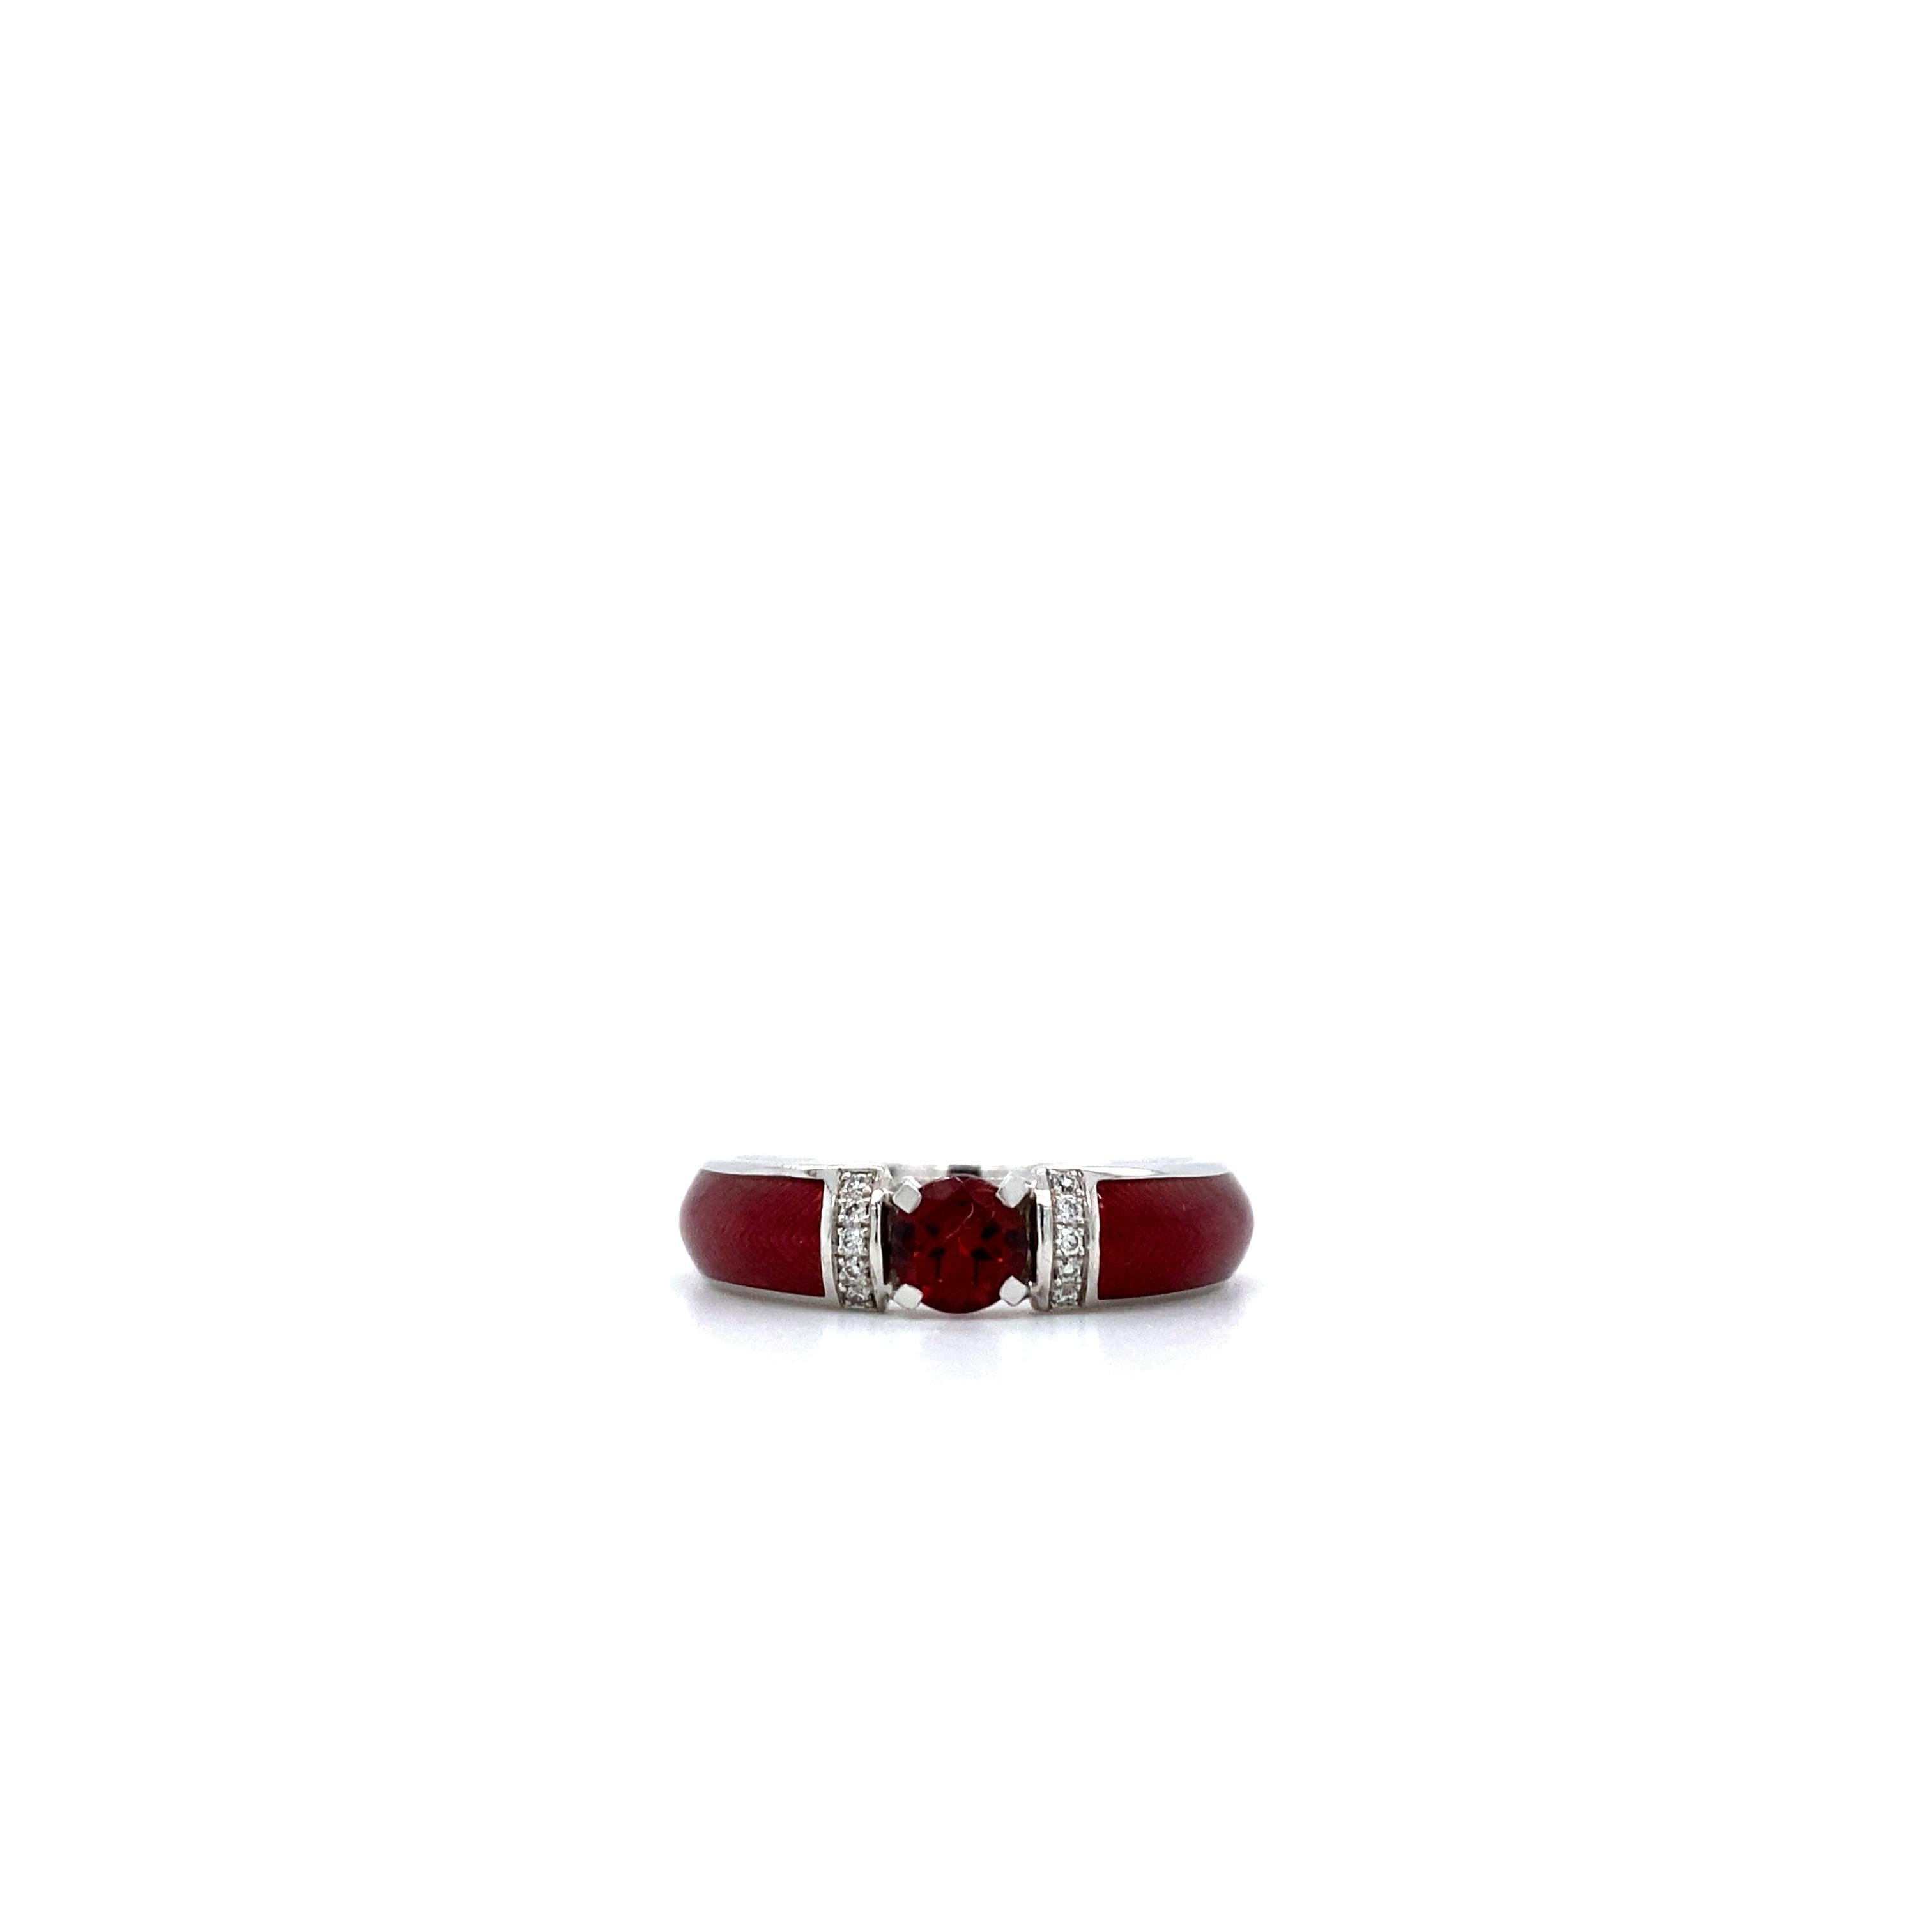 For Sale:  Red Vitreous Enamel Ring 18k White Gold 0, 5 ct Solitaire 10 Diamonds 0.05ct G VS 2